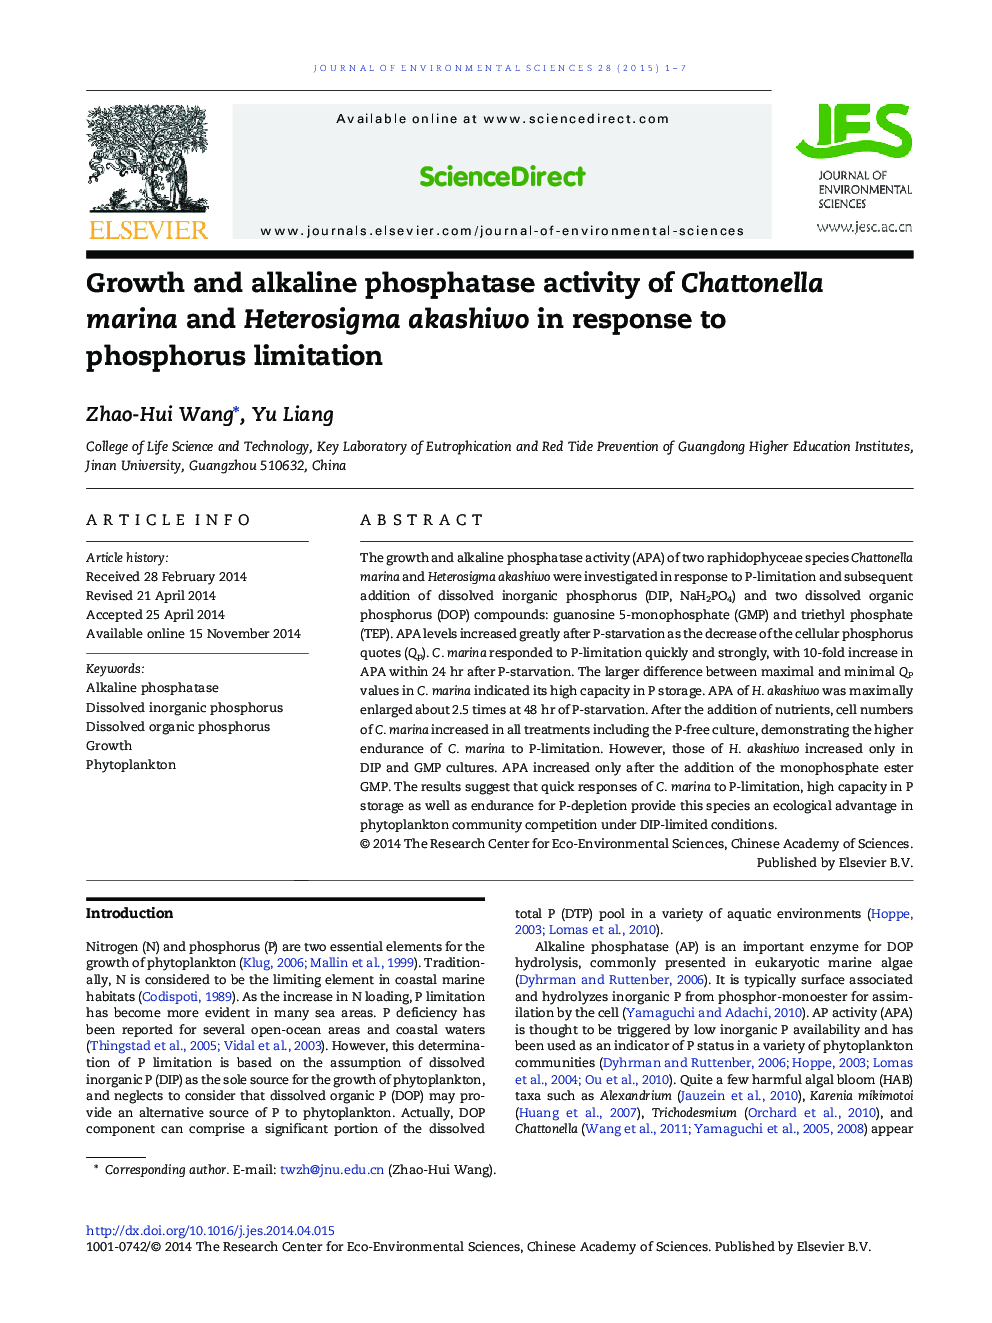 Growth and alkaline phosphatase activity of Chattonella marina and Heterosigma akashiwo in response to phosphorus limitation